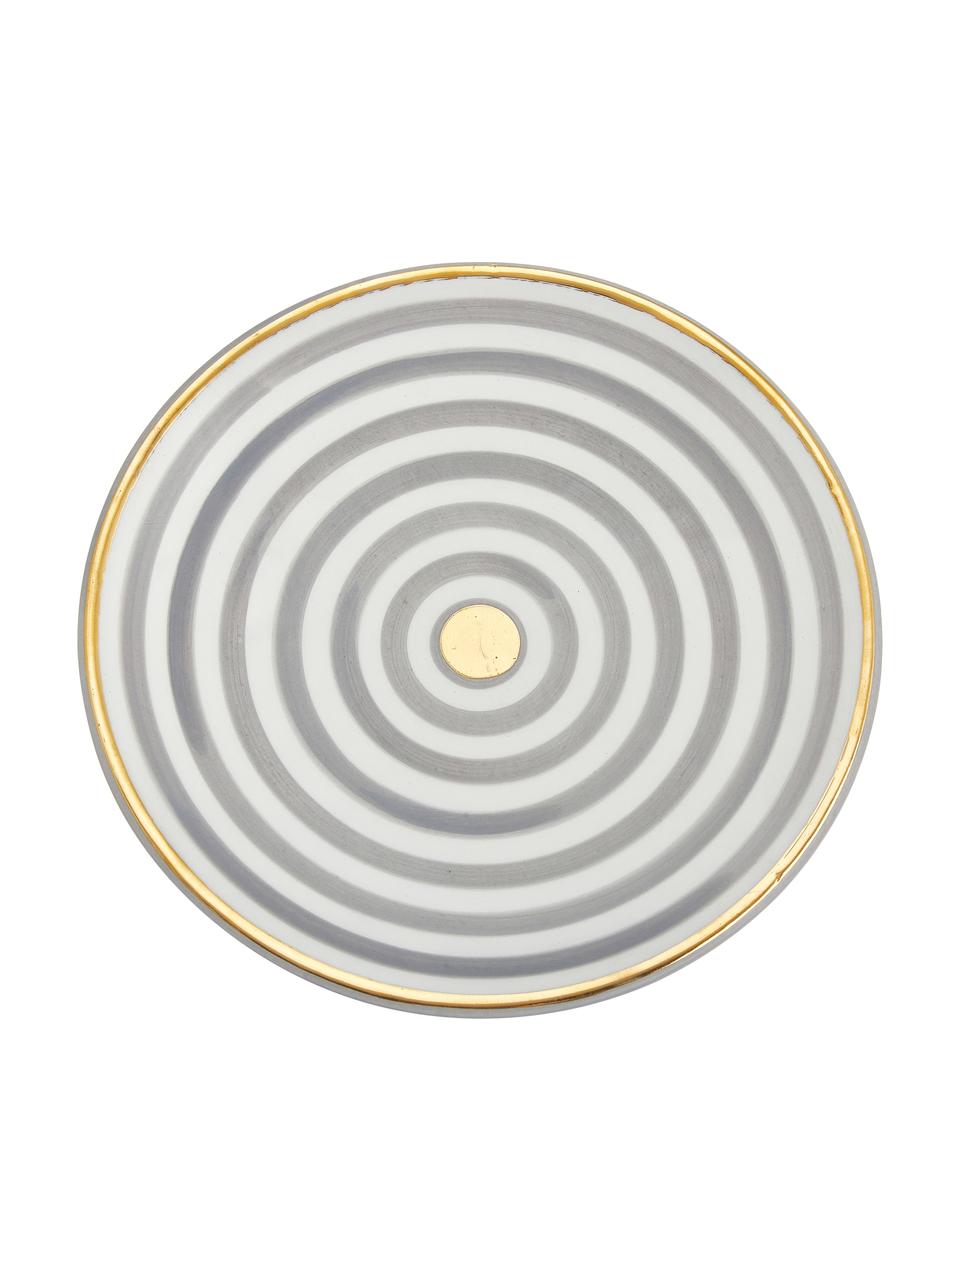 Plato postre artesanal Assiette, estilo marroquí, Cerámica, Gris claro, crema, oro, Ø 20 cm